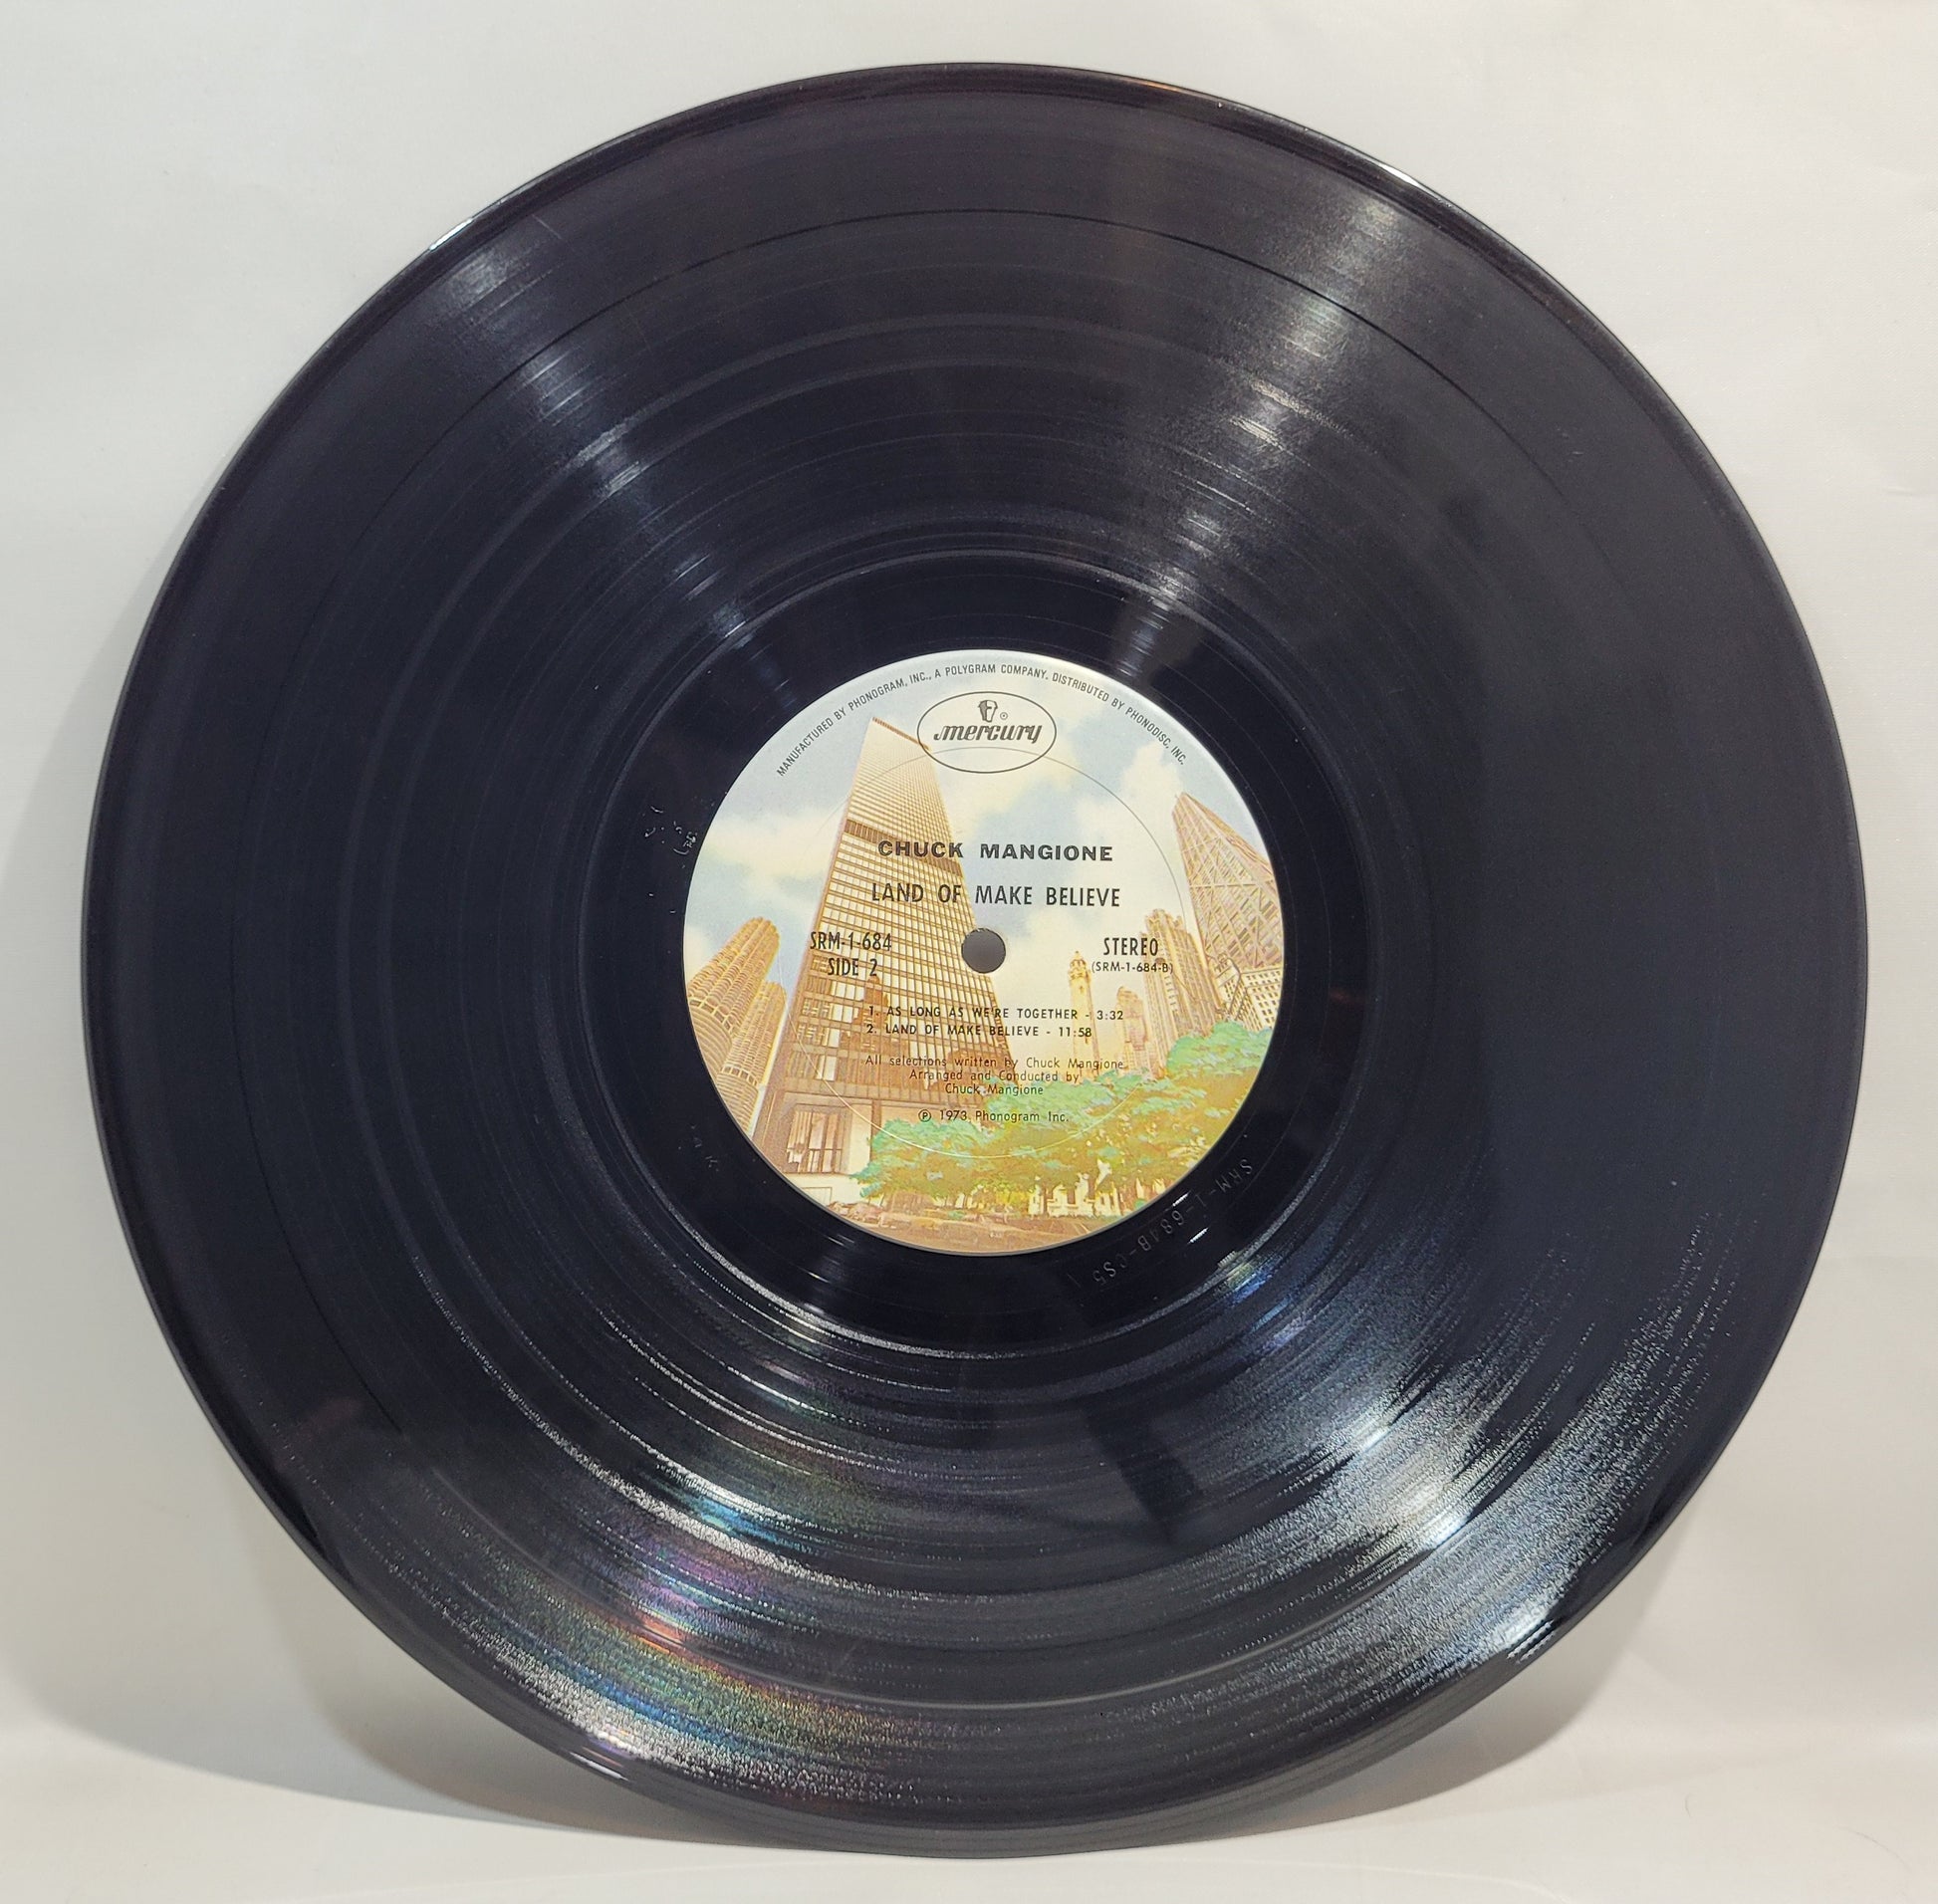 Chuck Mangione - Land of Make Believe...A Chuck Mangione Concert [Vinyl Record LP]